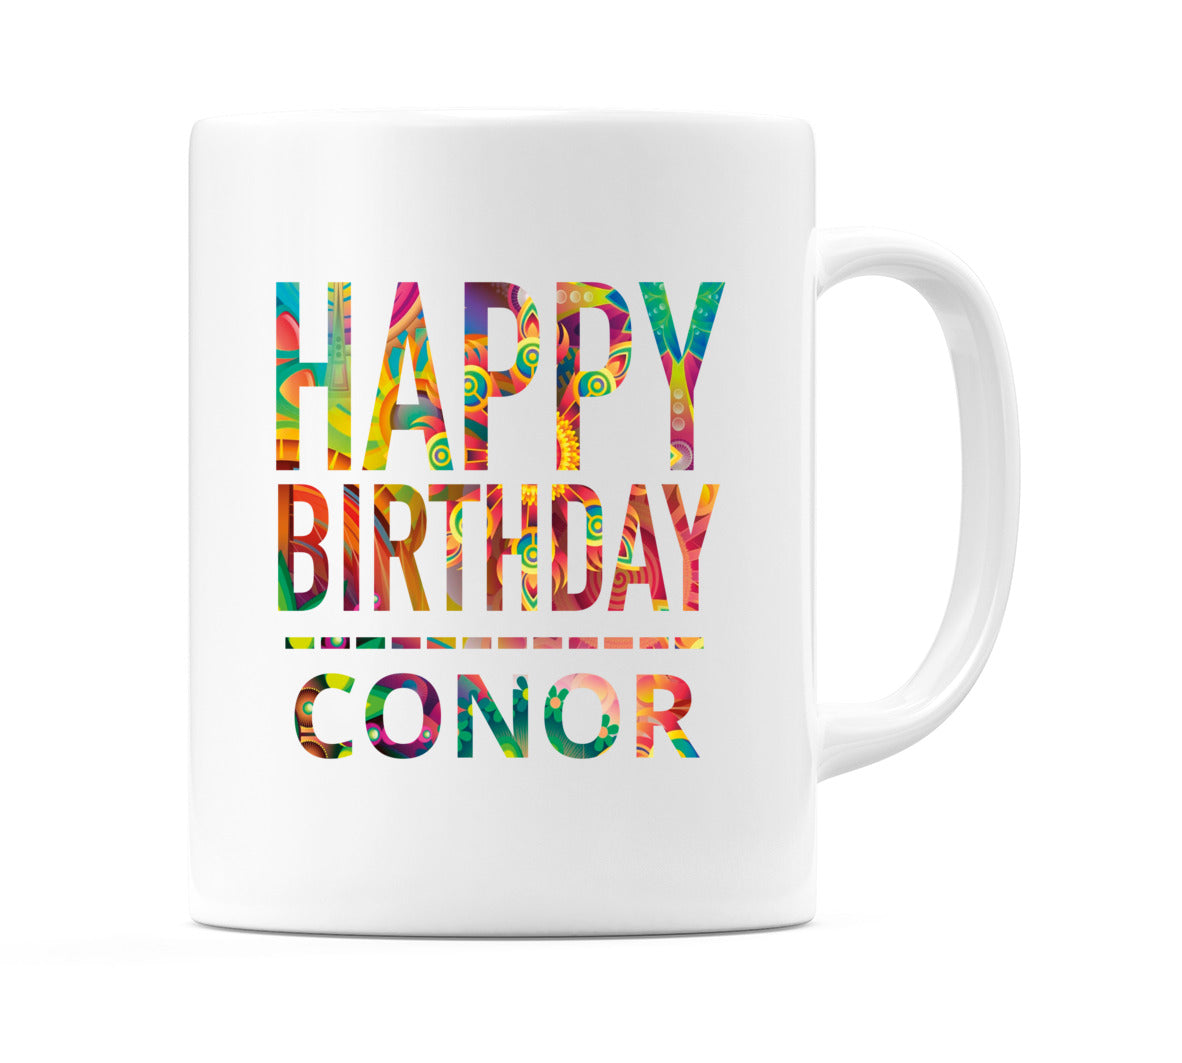 Happy Birthday Conor (Tie Dye Effect) Mug Cup by WeDoMugs